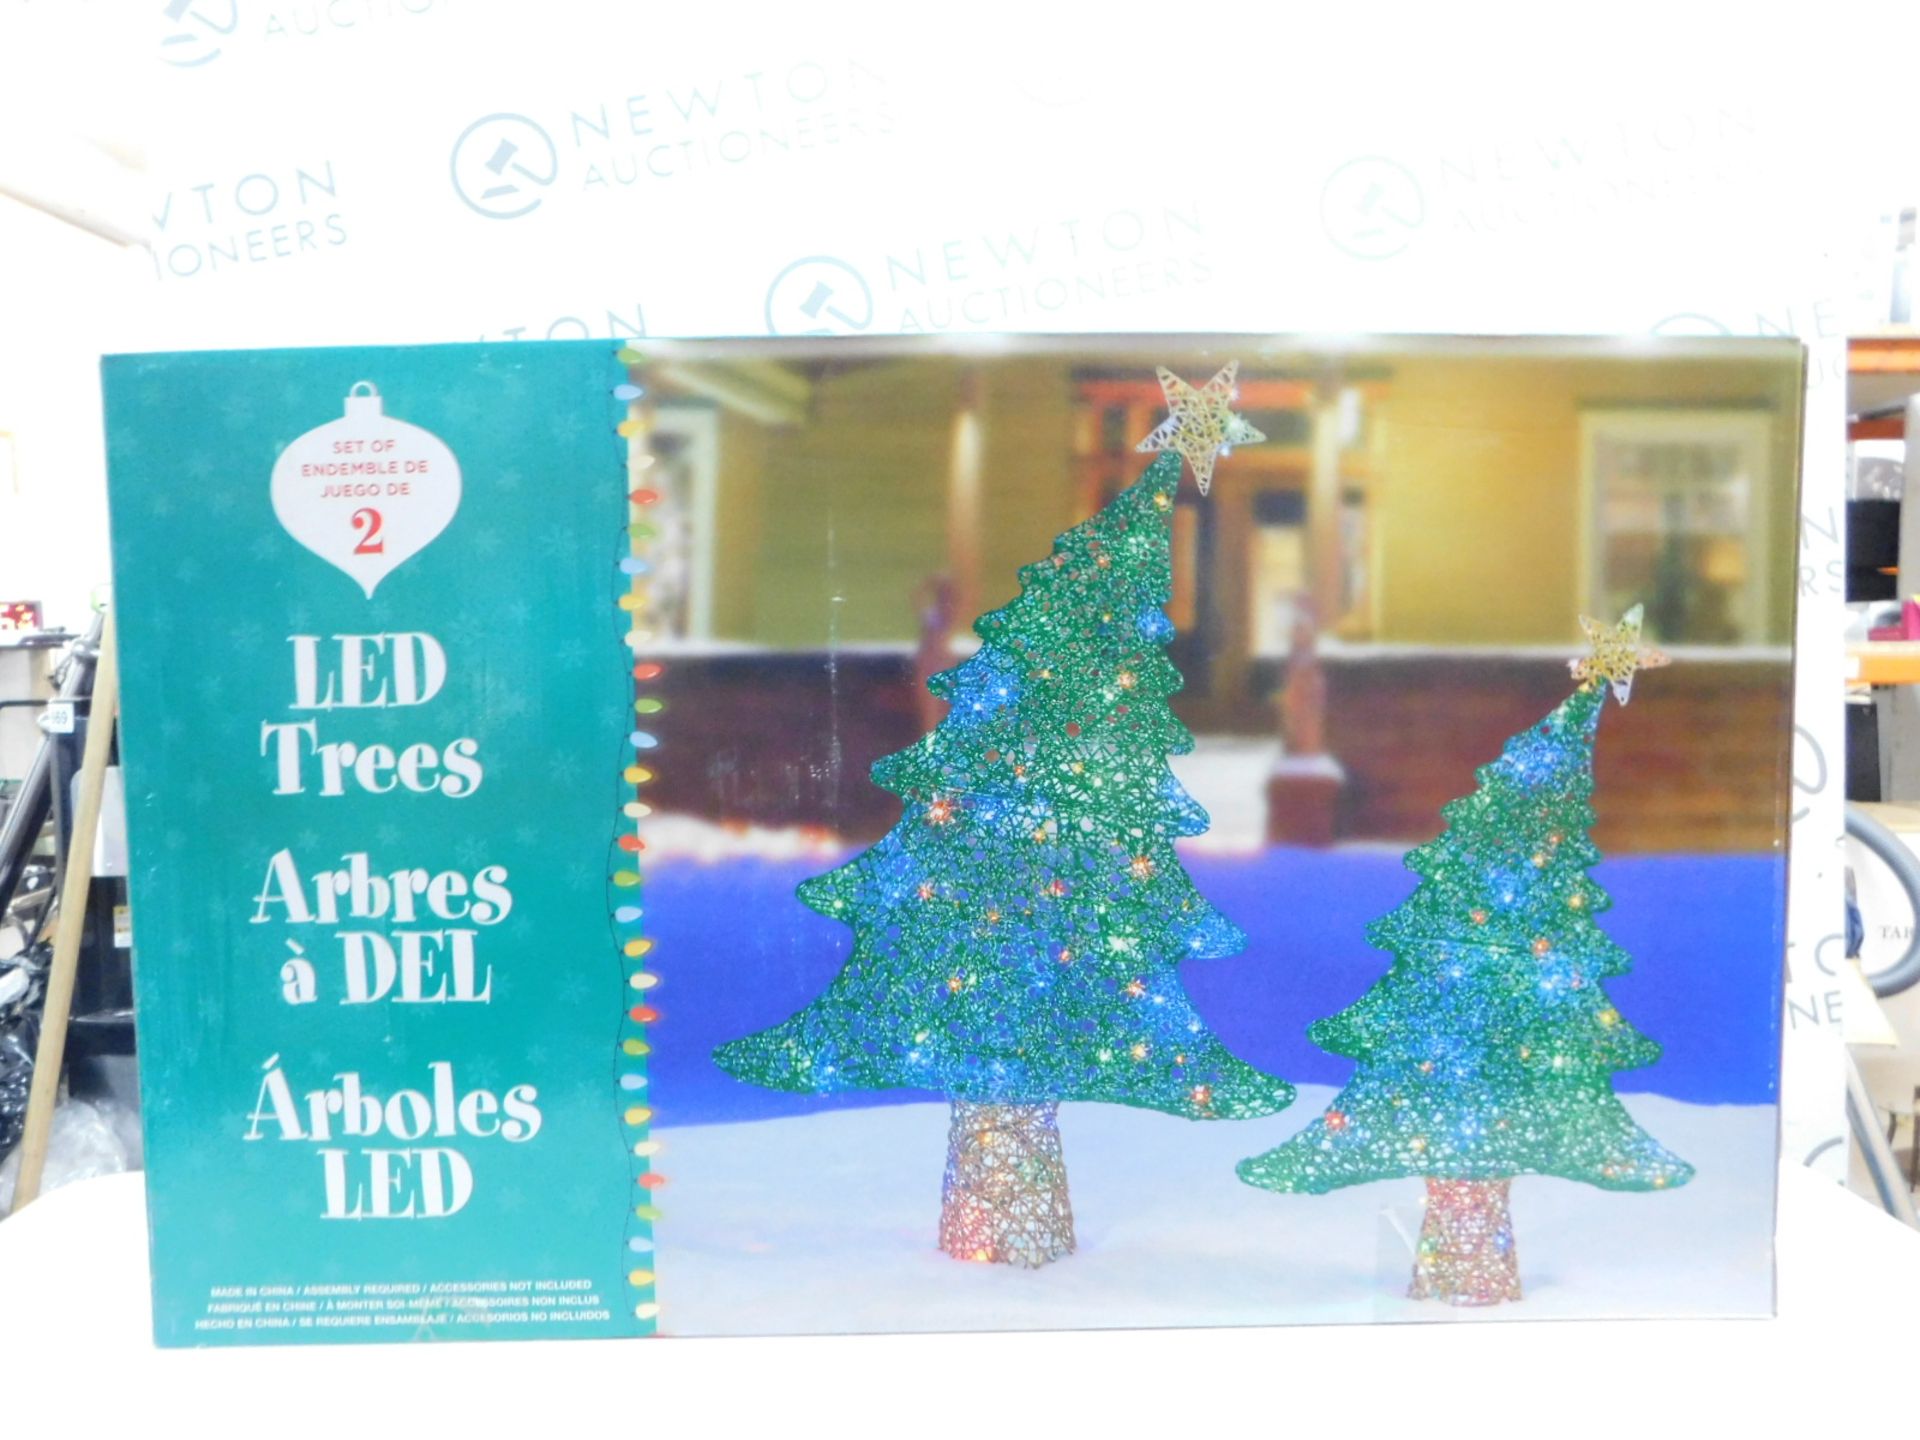 1 BOXED SET OF 2 LED TREES RRP Â£79.99